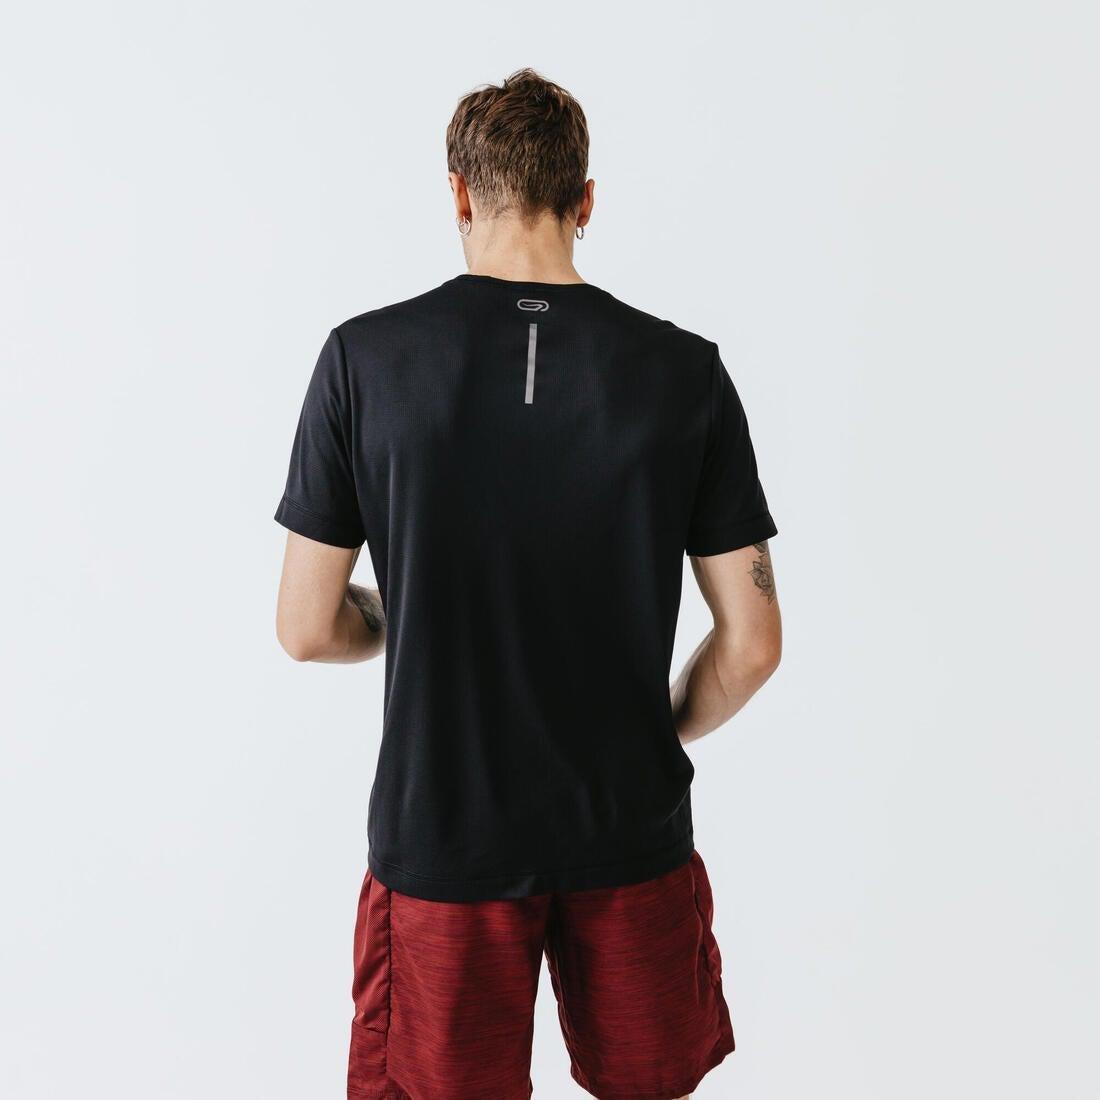 KALENJI - Mens Kalenji Dry Breathable Running T-Shirt, Black